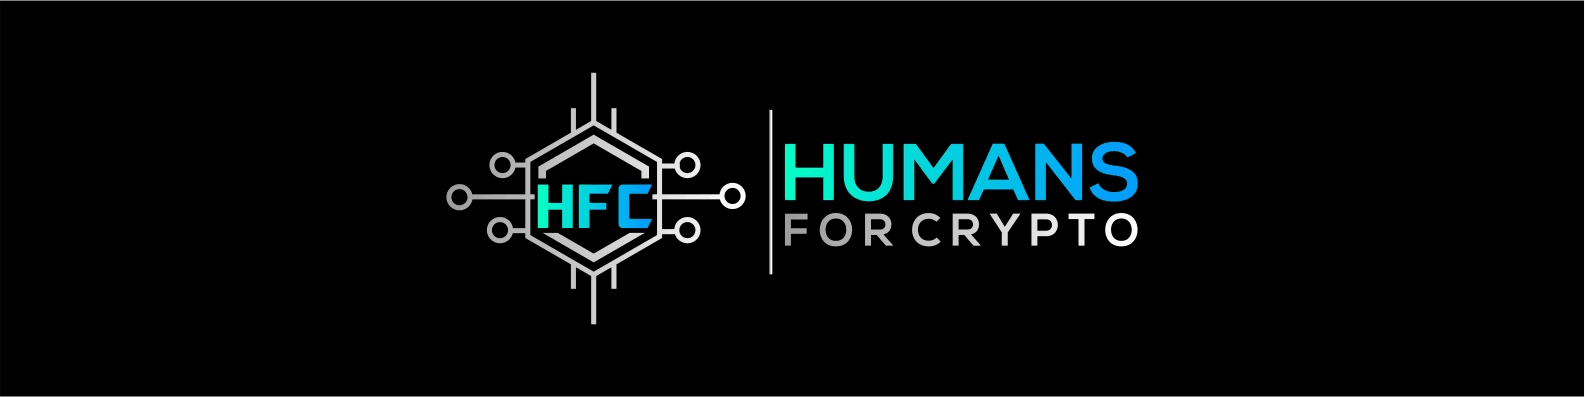 HumansForCrypto banner